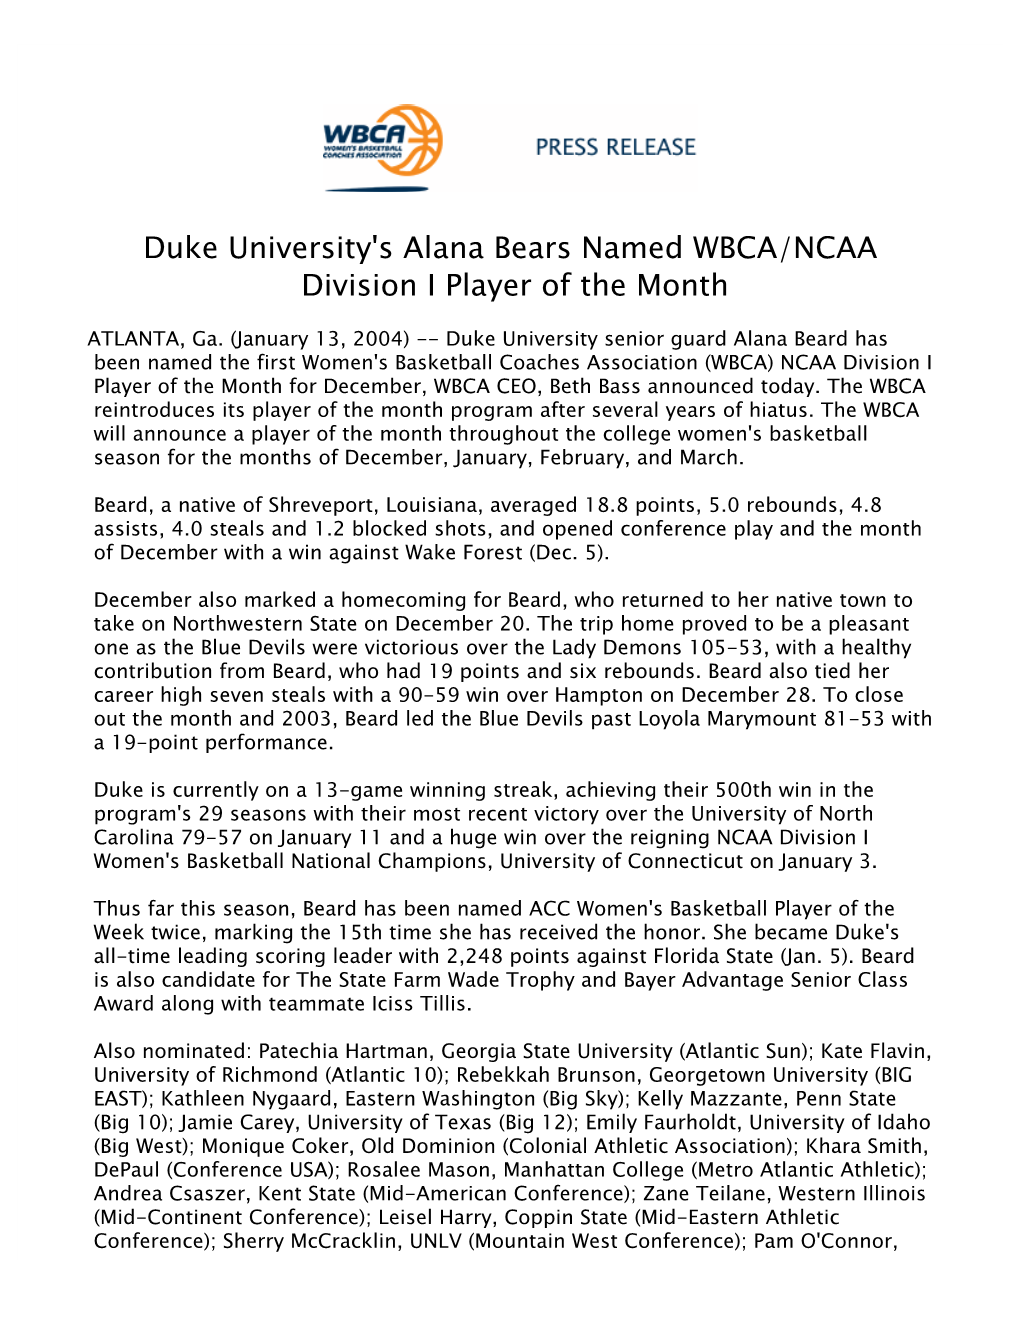 Duke University's Alana Bears Named WBCA/NCAA Division I Player of the Month